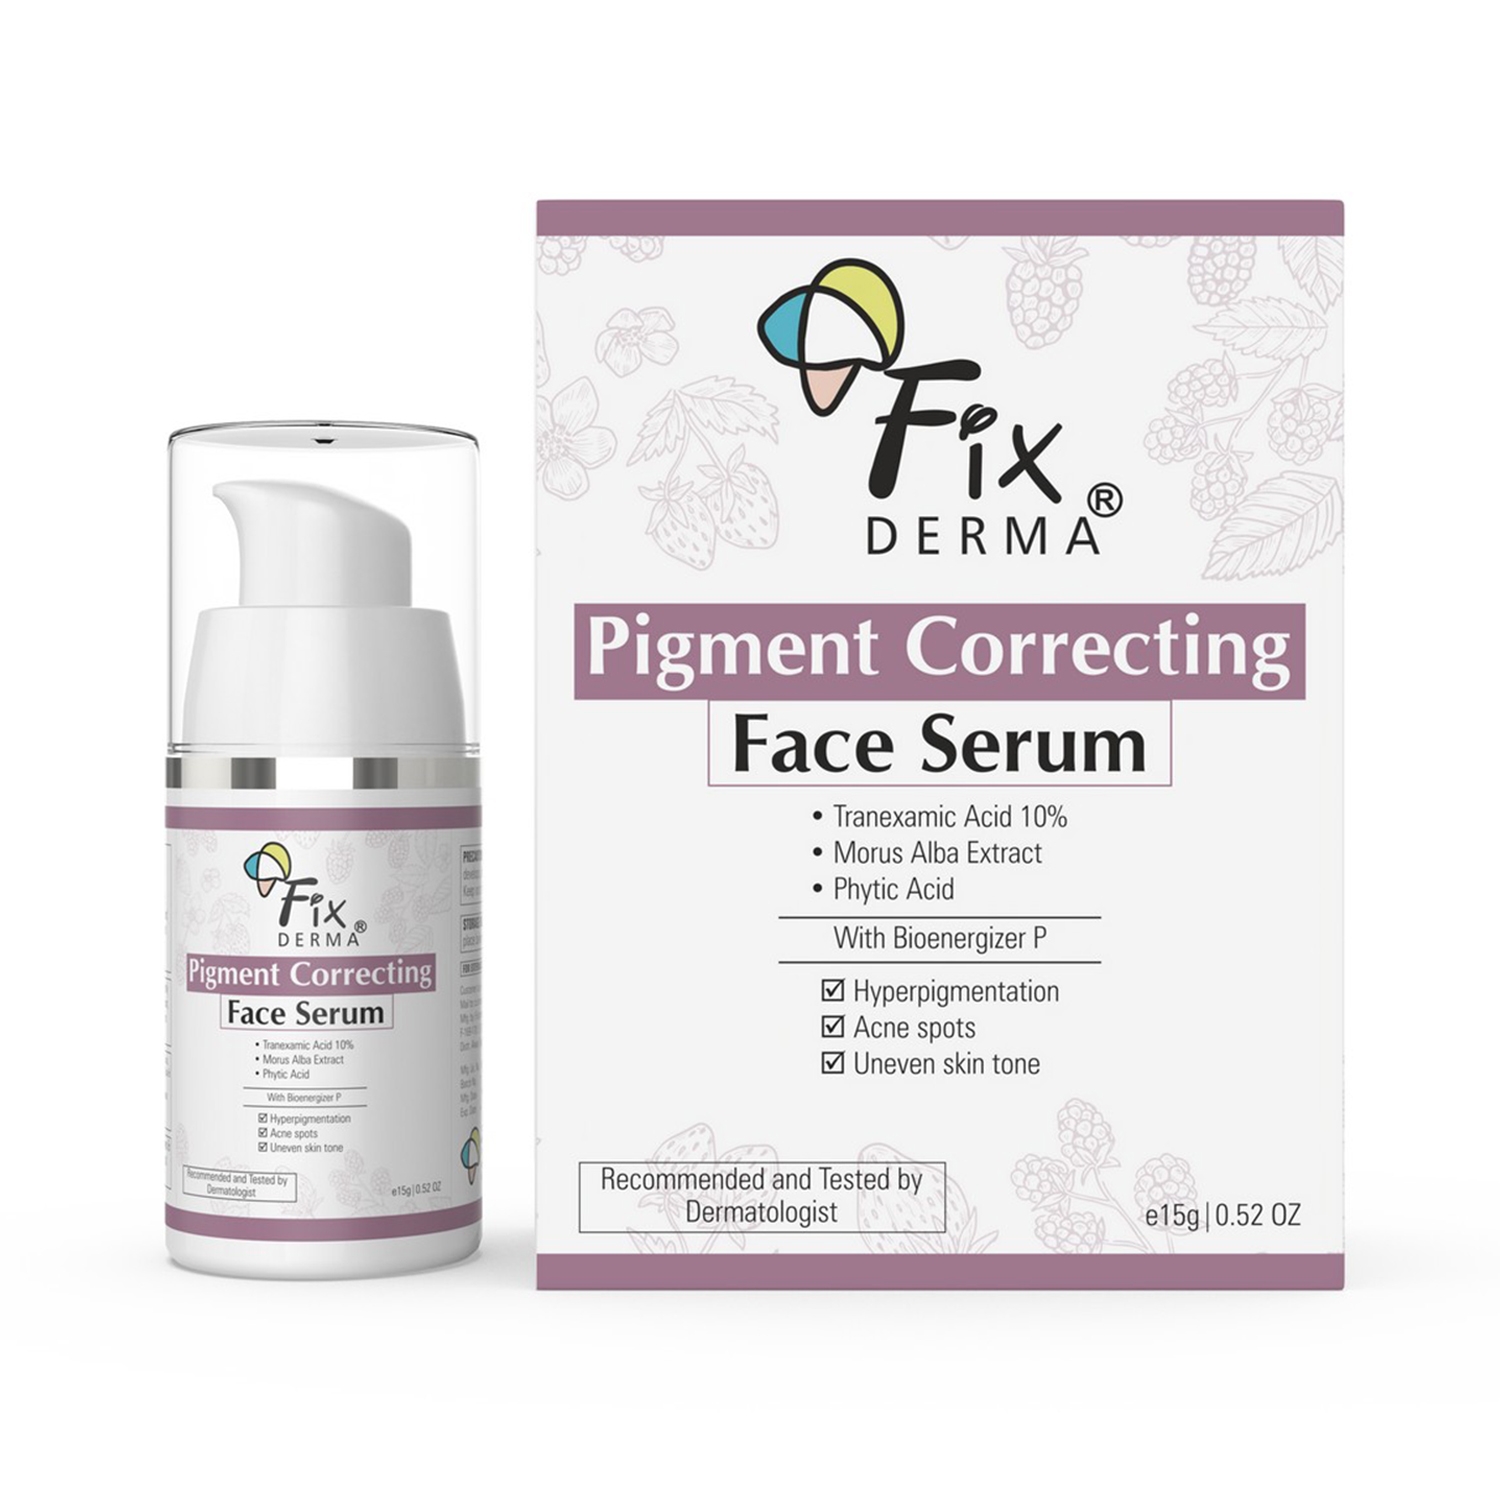 Fixderma | Fixderma 10% Tranexamic Acid Pigment Correcting Face Serum (15g)